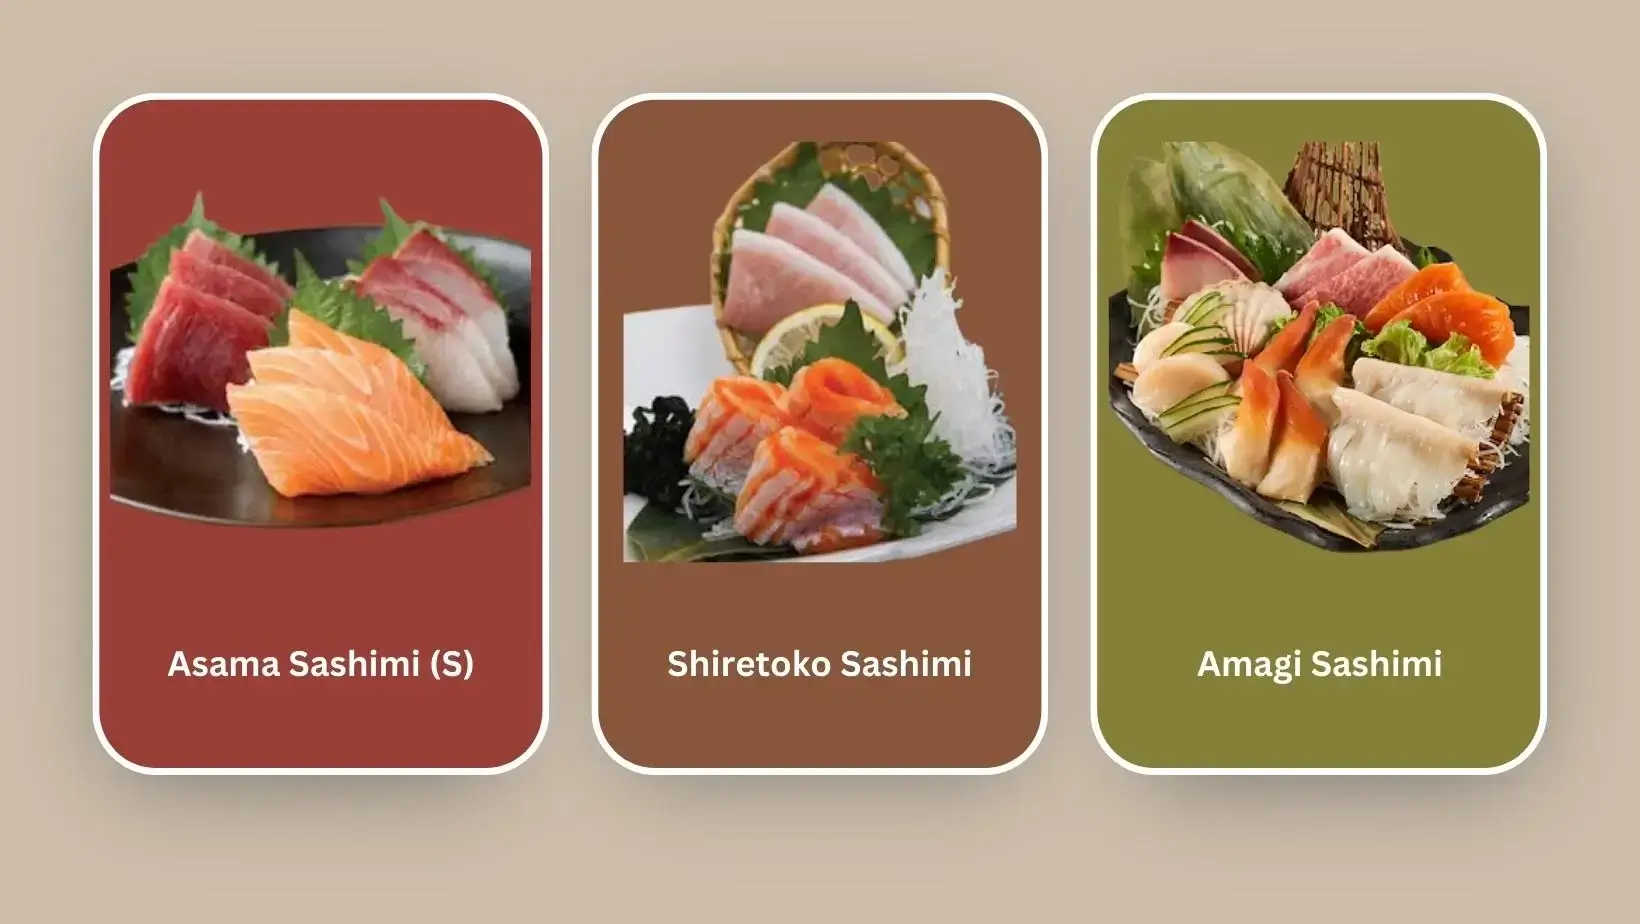 Amagi Sashimi, Shiretoko Sashimi, and Asama Sashimi (S) at sushi Zanmai menu Malaysia